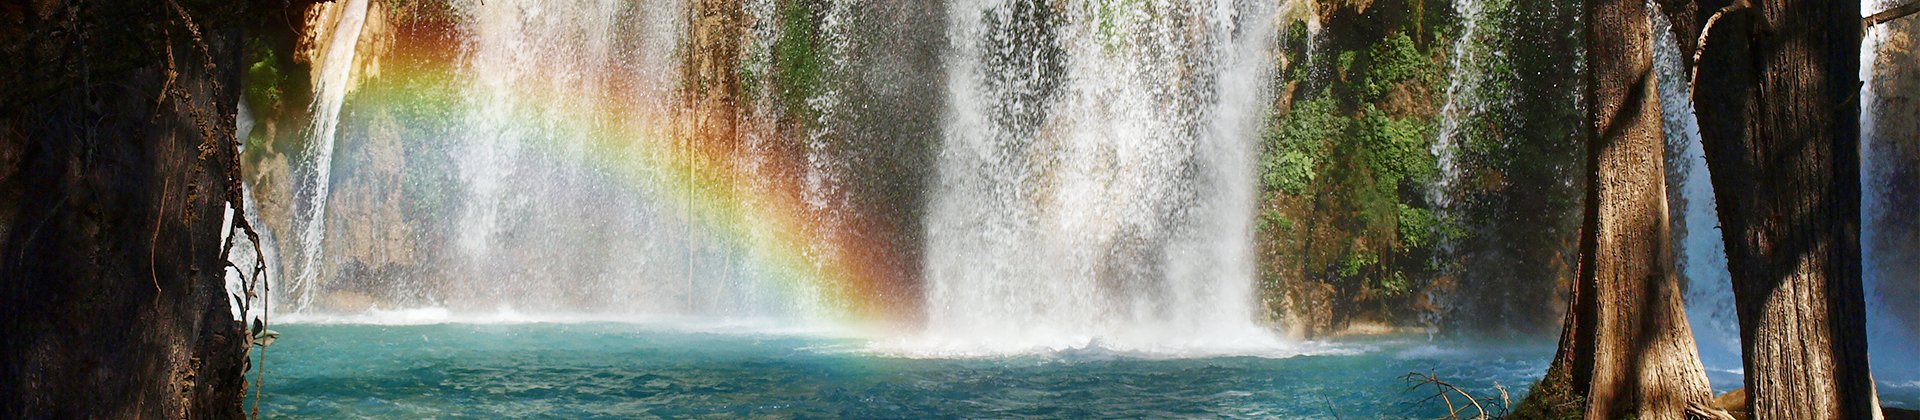  El Chiflon Waterfalls